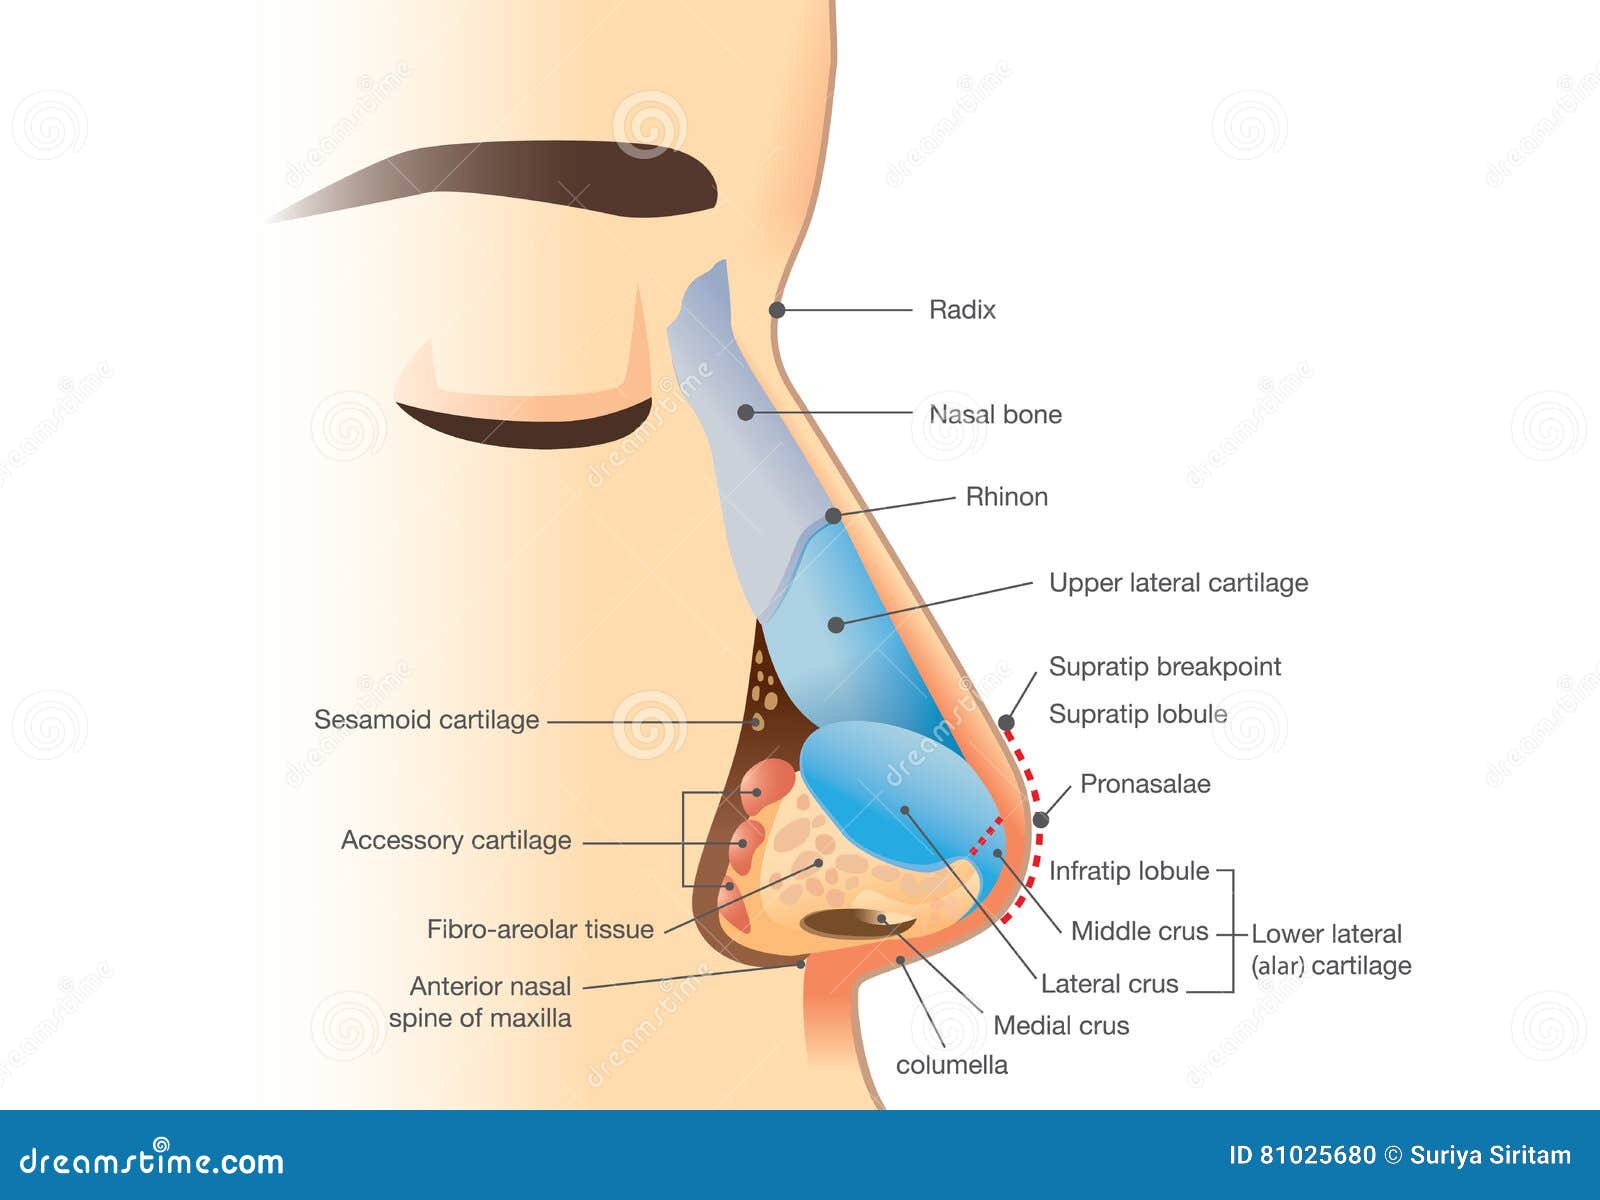 anatomy of human nose